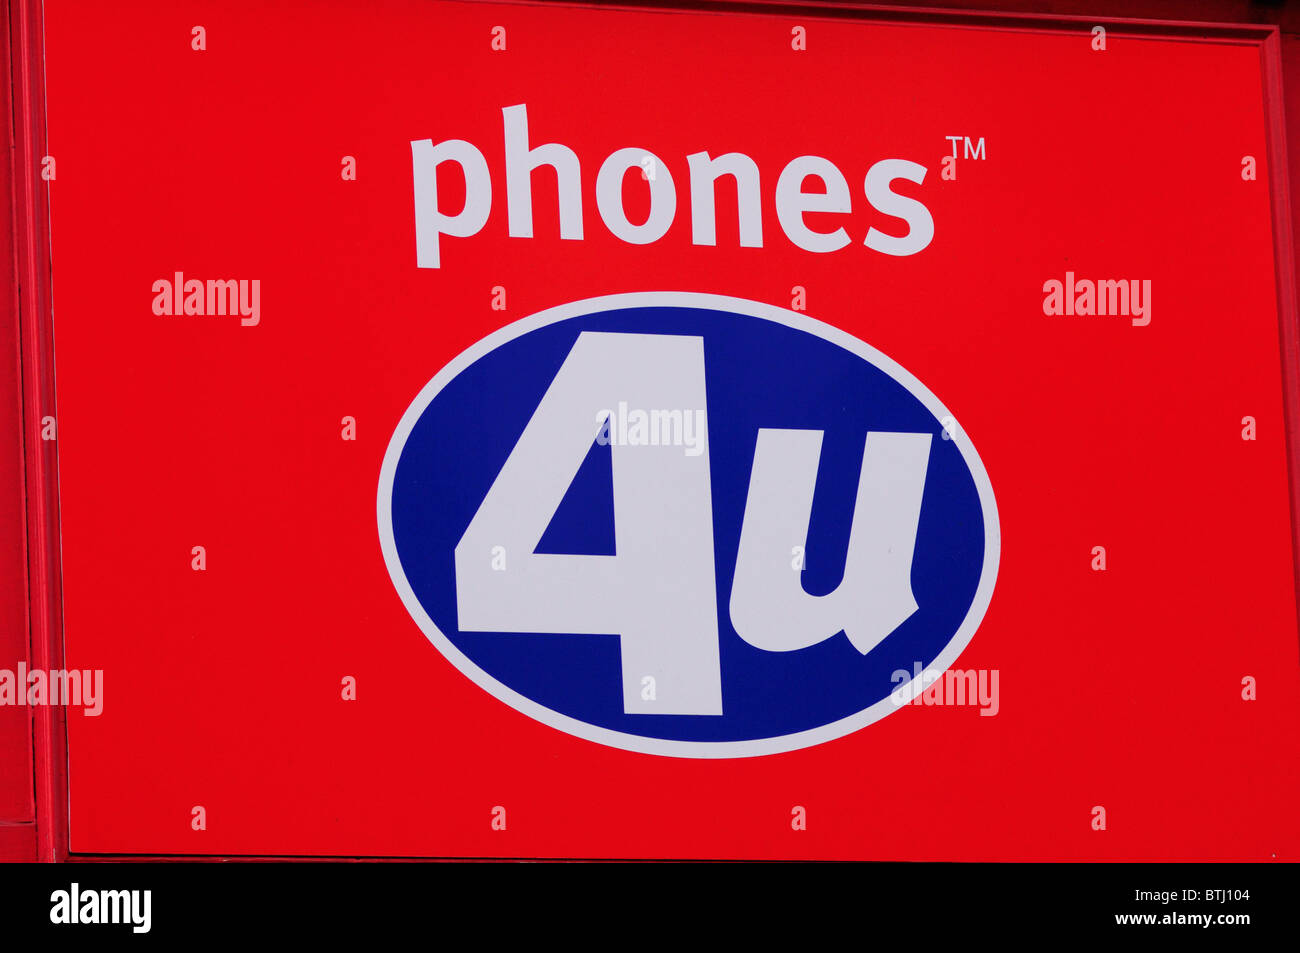 Phones 4U mobile phone shop sign logo, Cambridge, England, UK Stock Photo